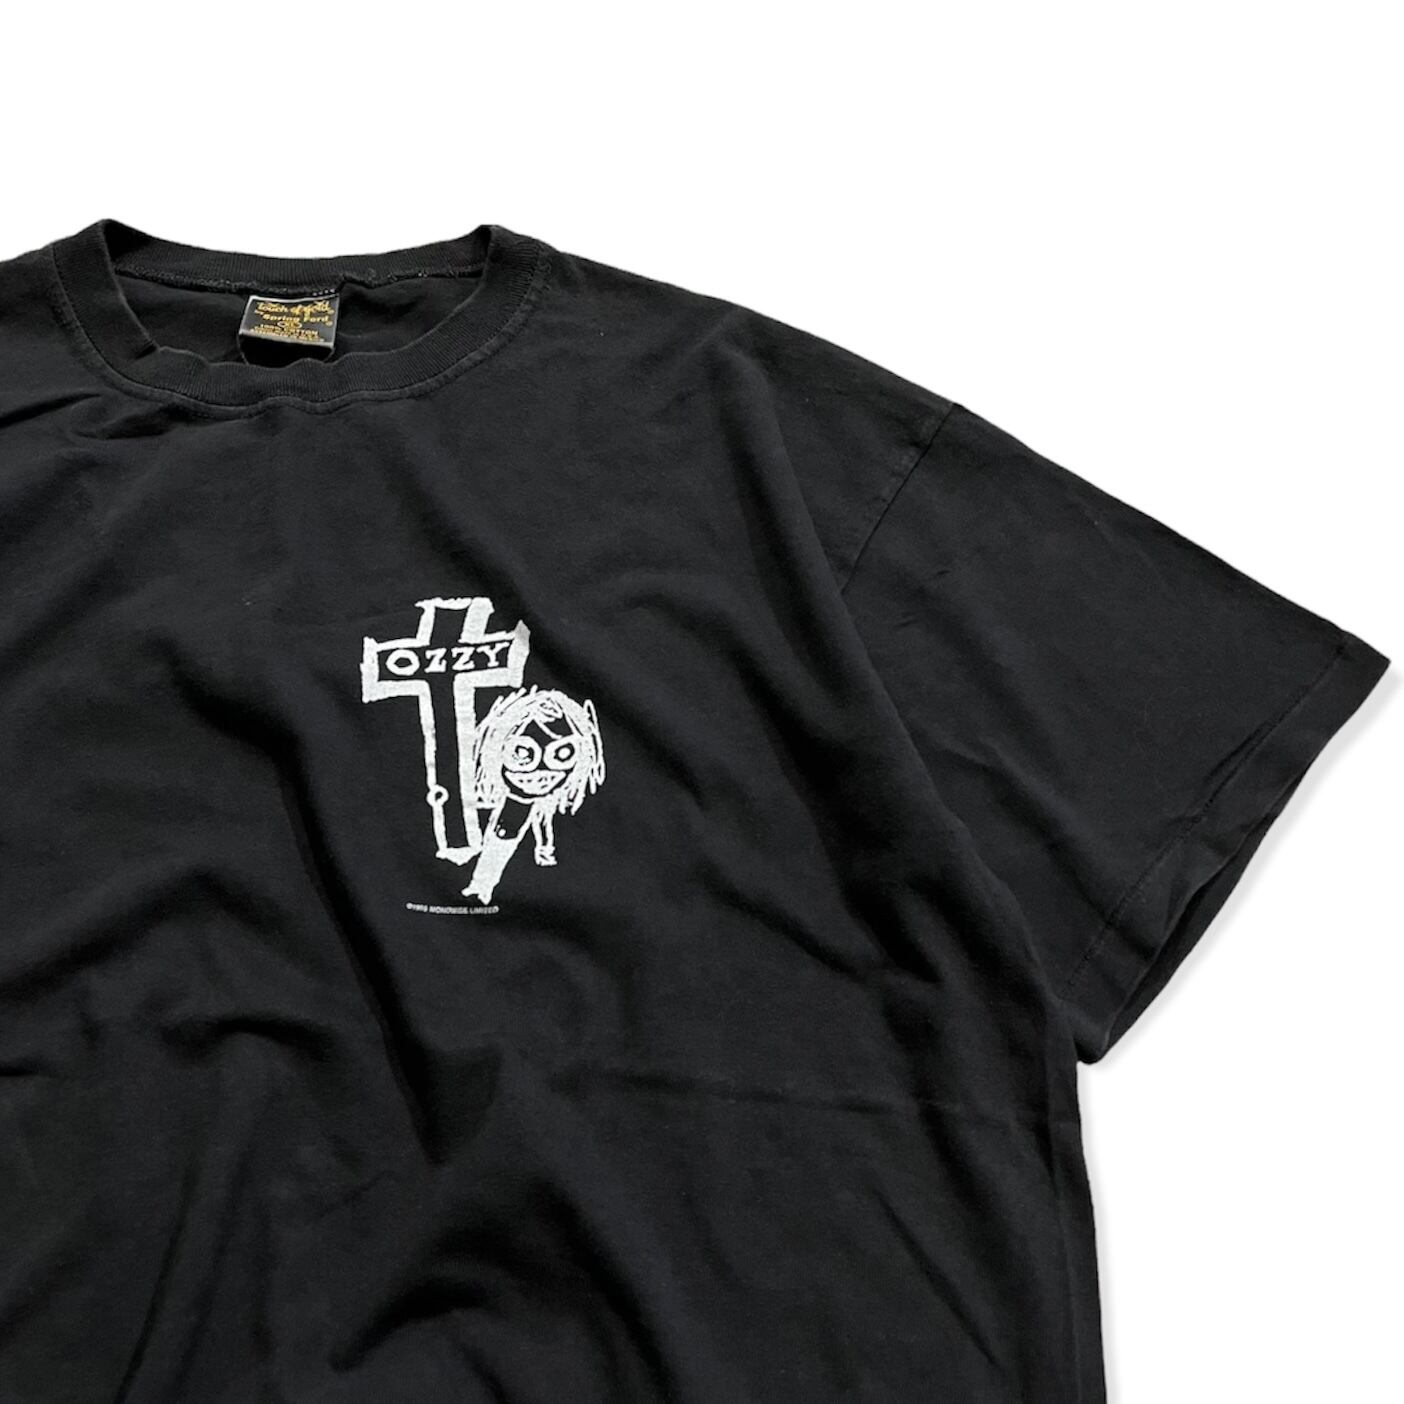 90s USA製 Vintage オジーオズボーン Tシャツ 黒 L HANES